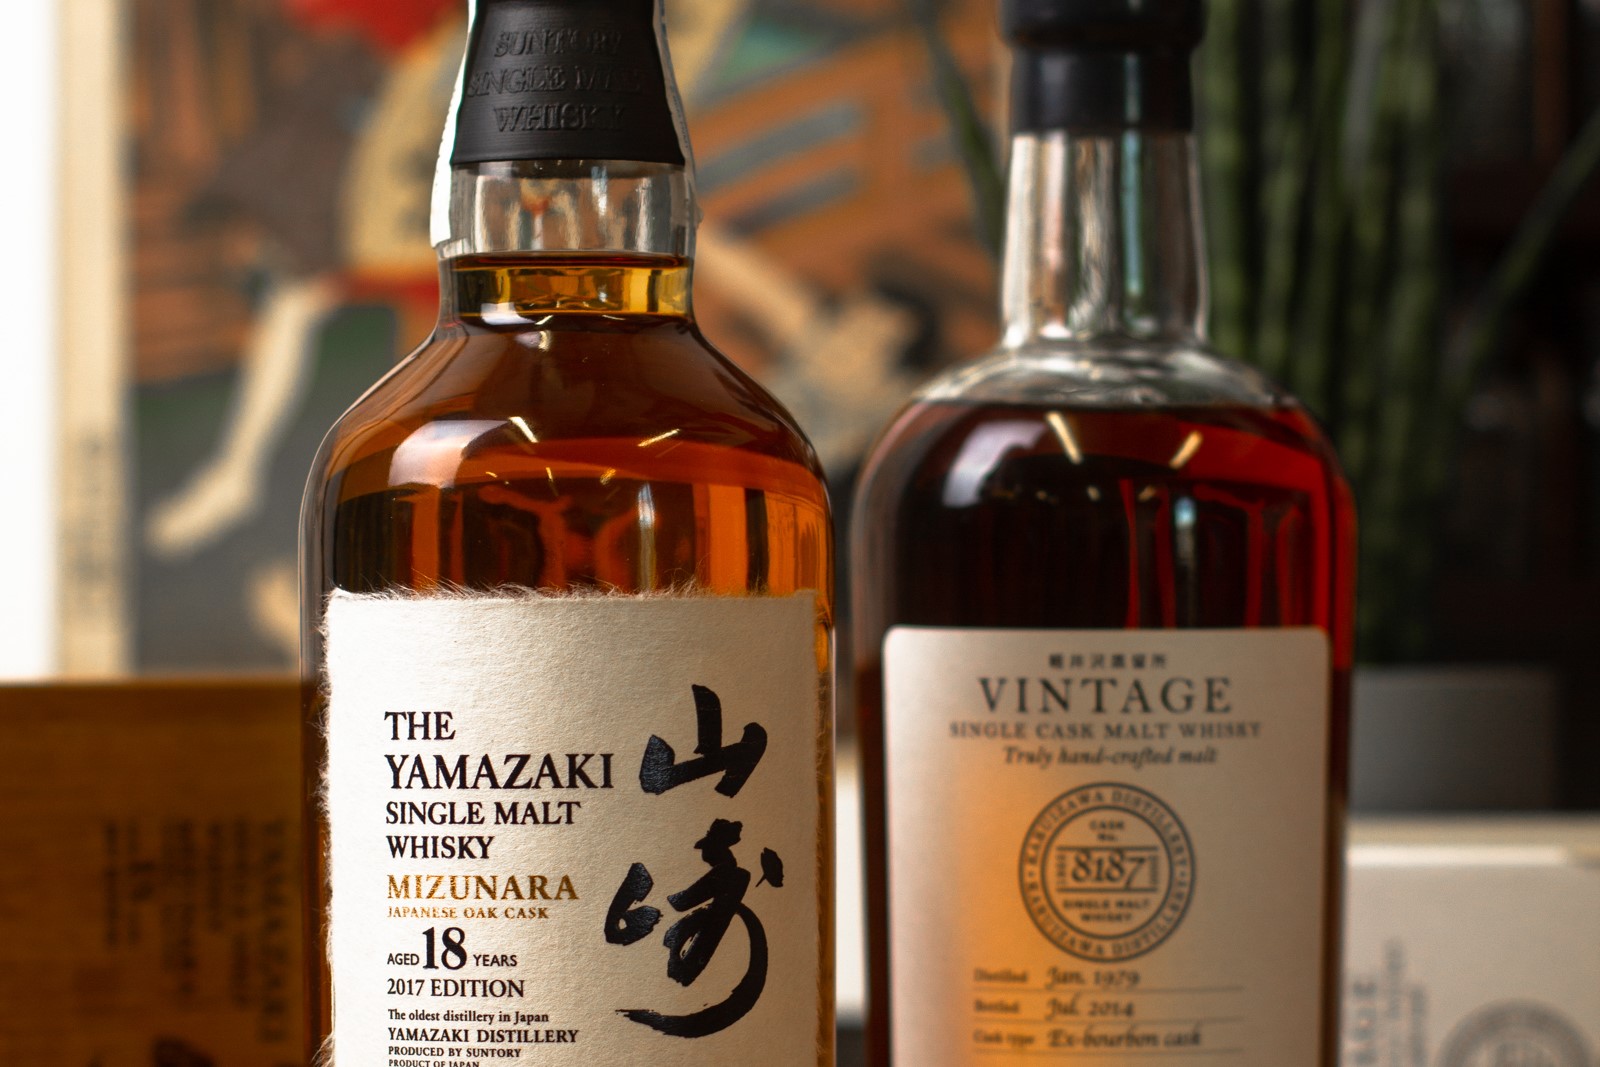 2021 Japanese whisky labeling standards